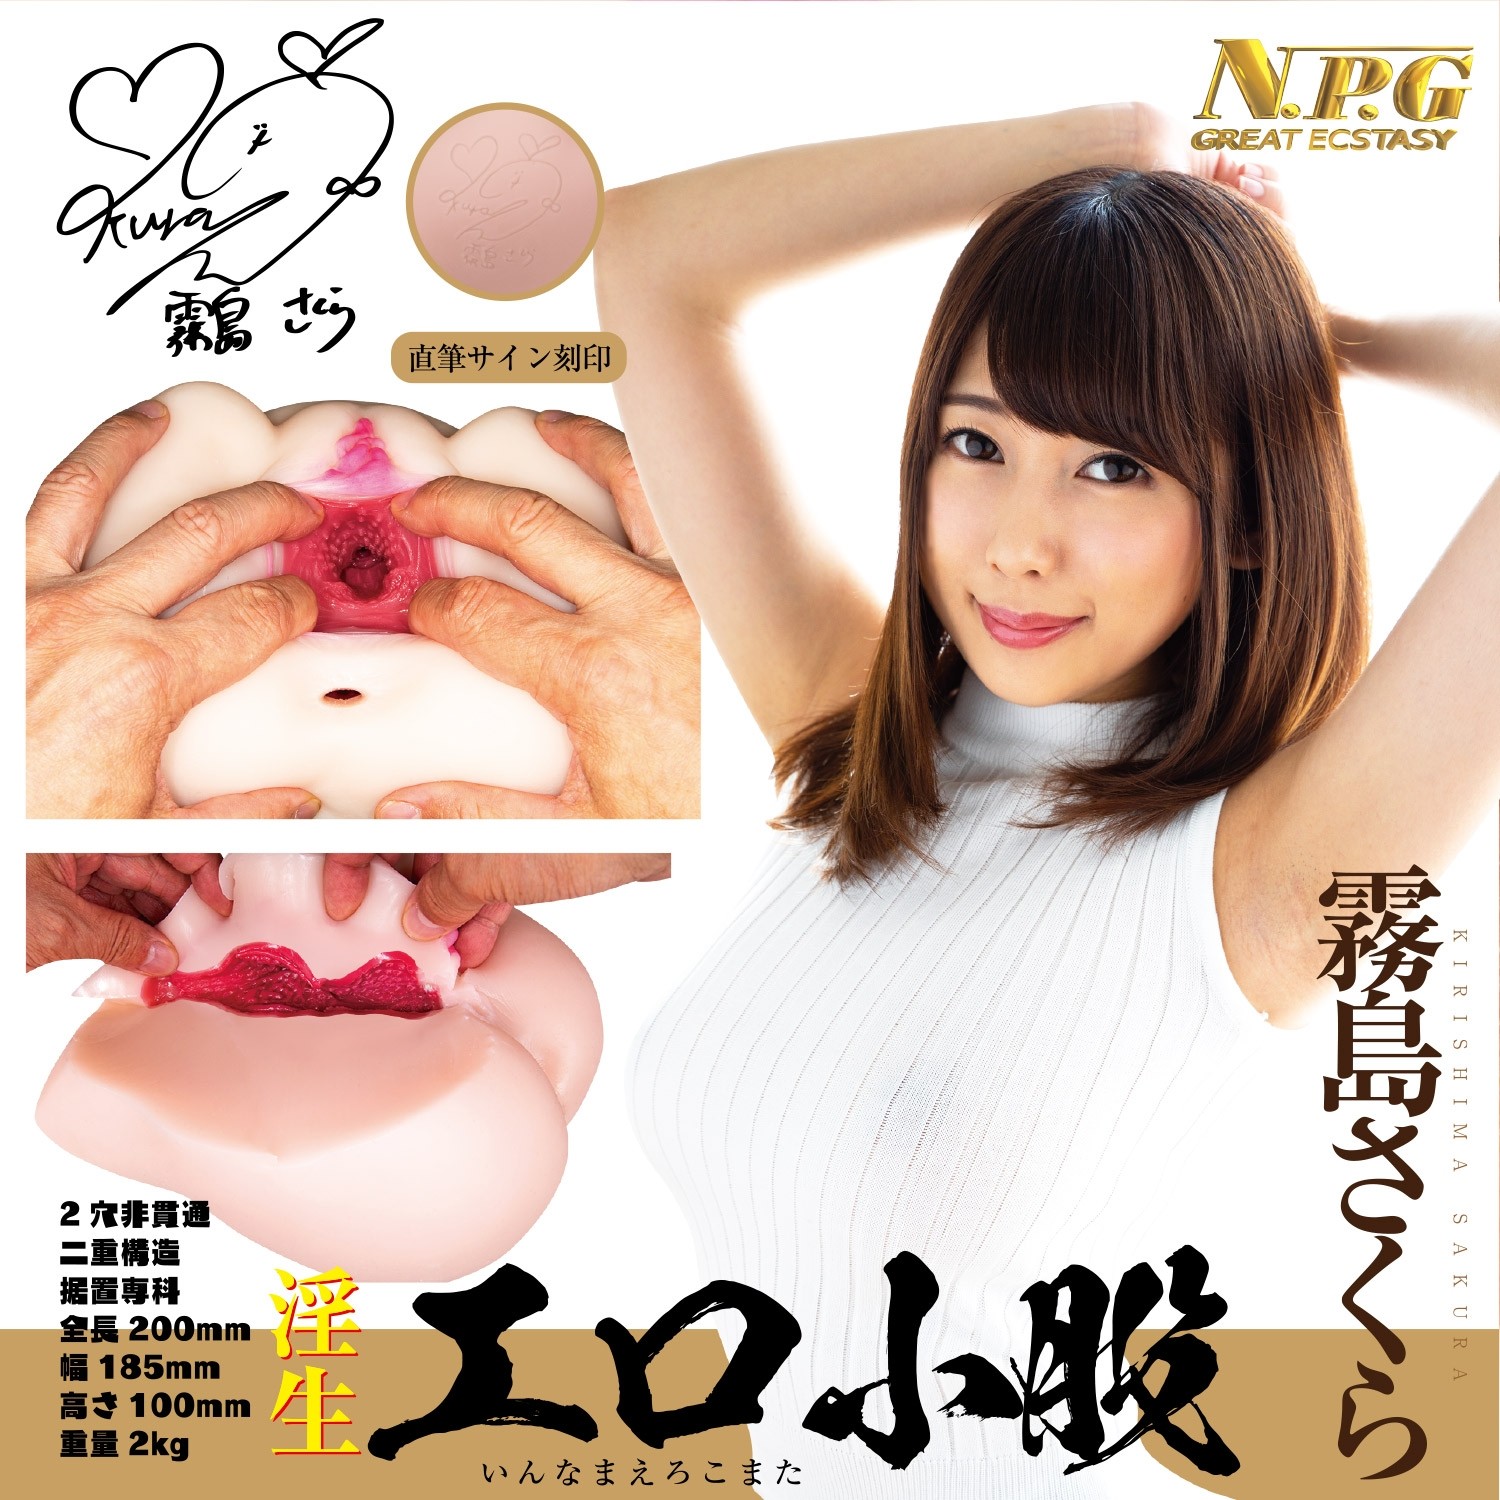 otonaJP - Horny Erotic Crotch Kirishima Sakura